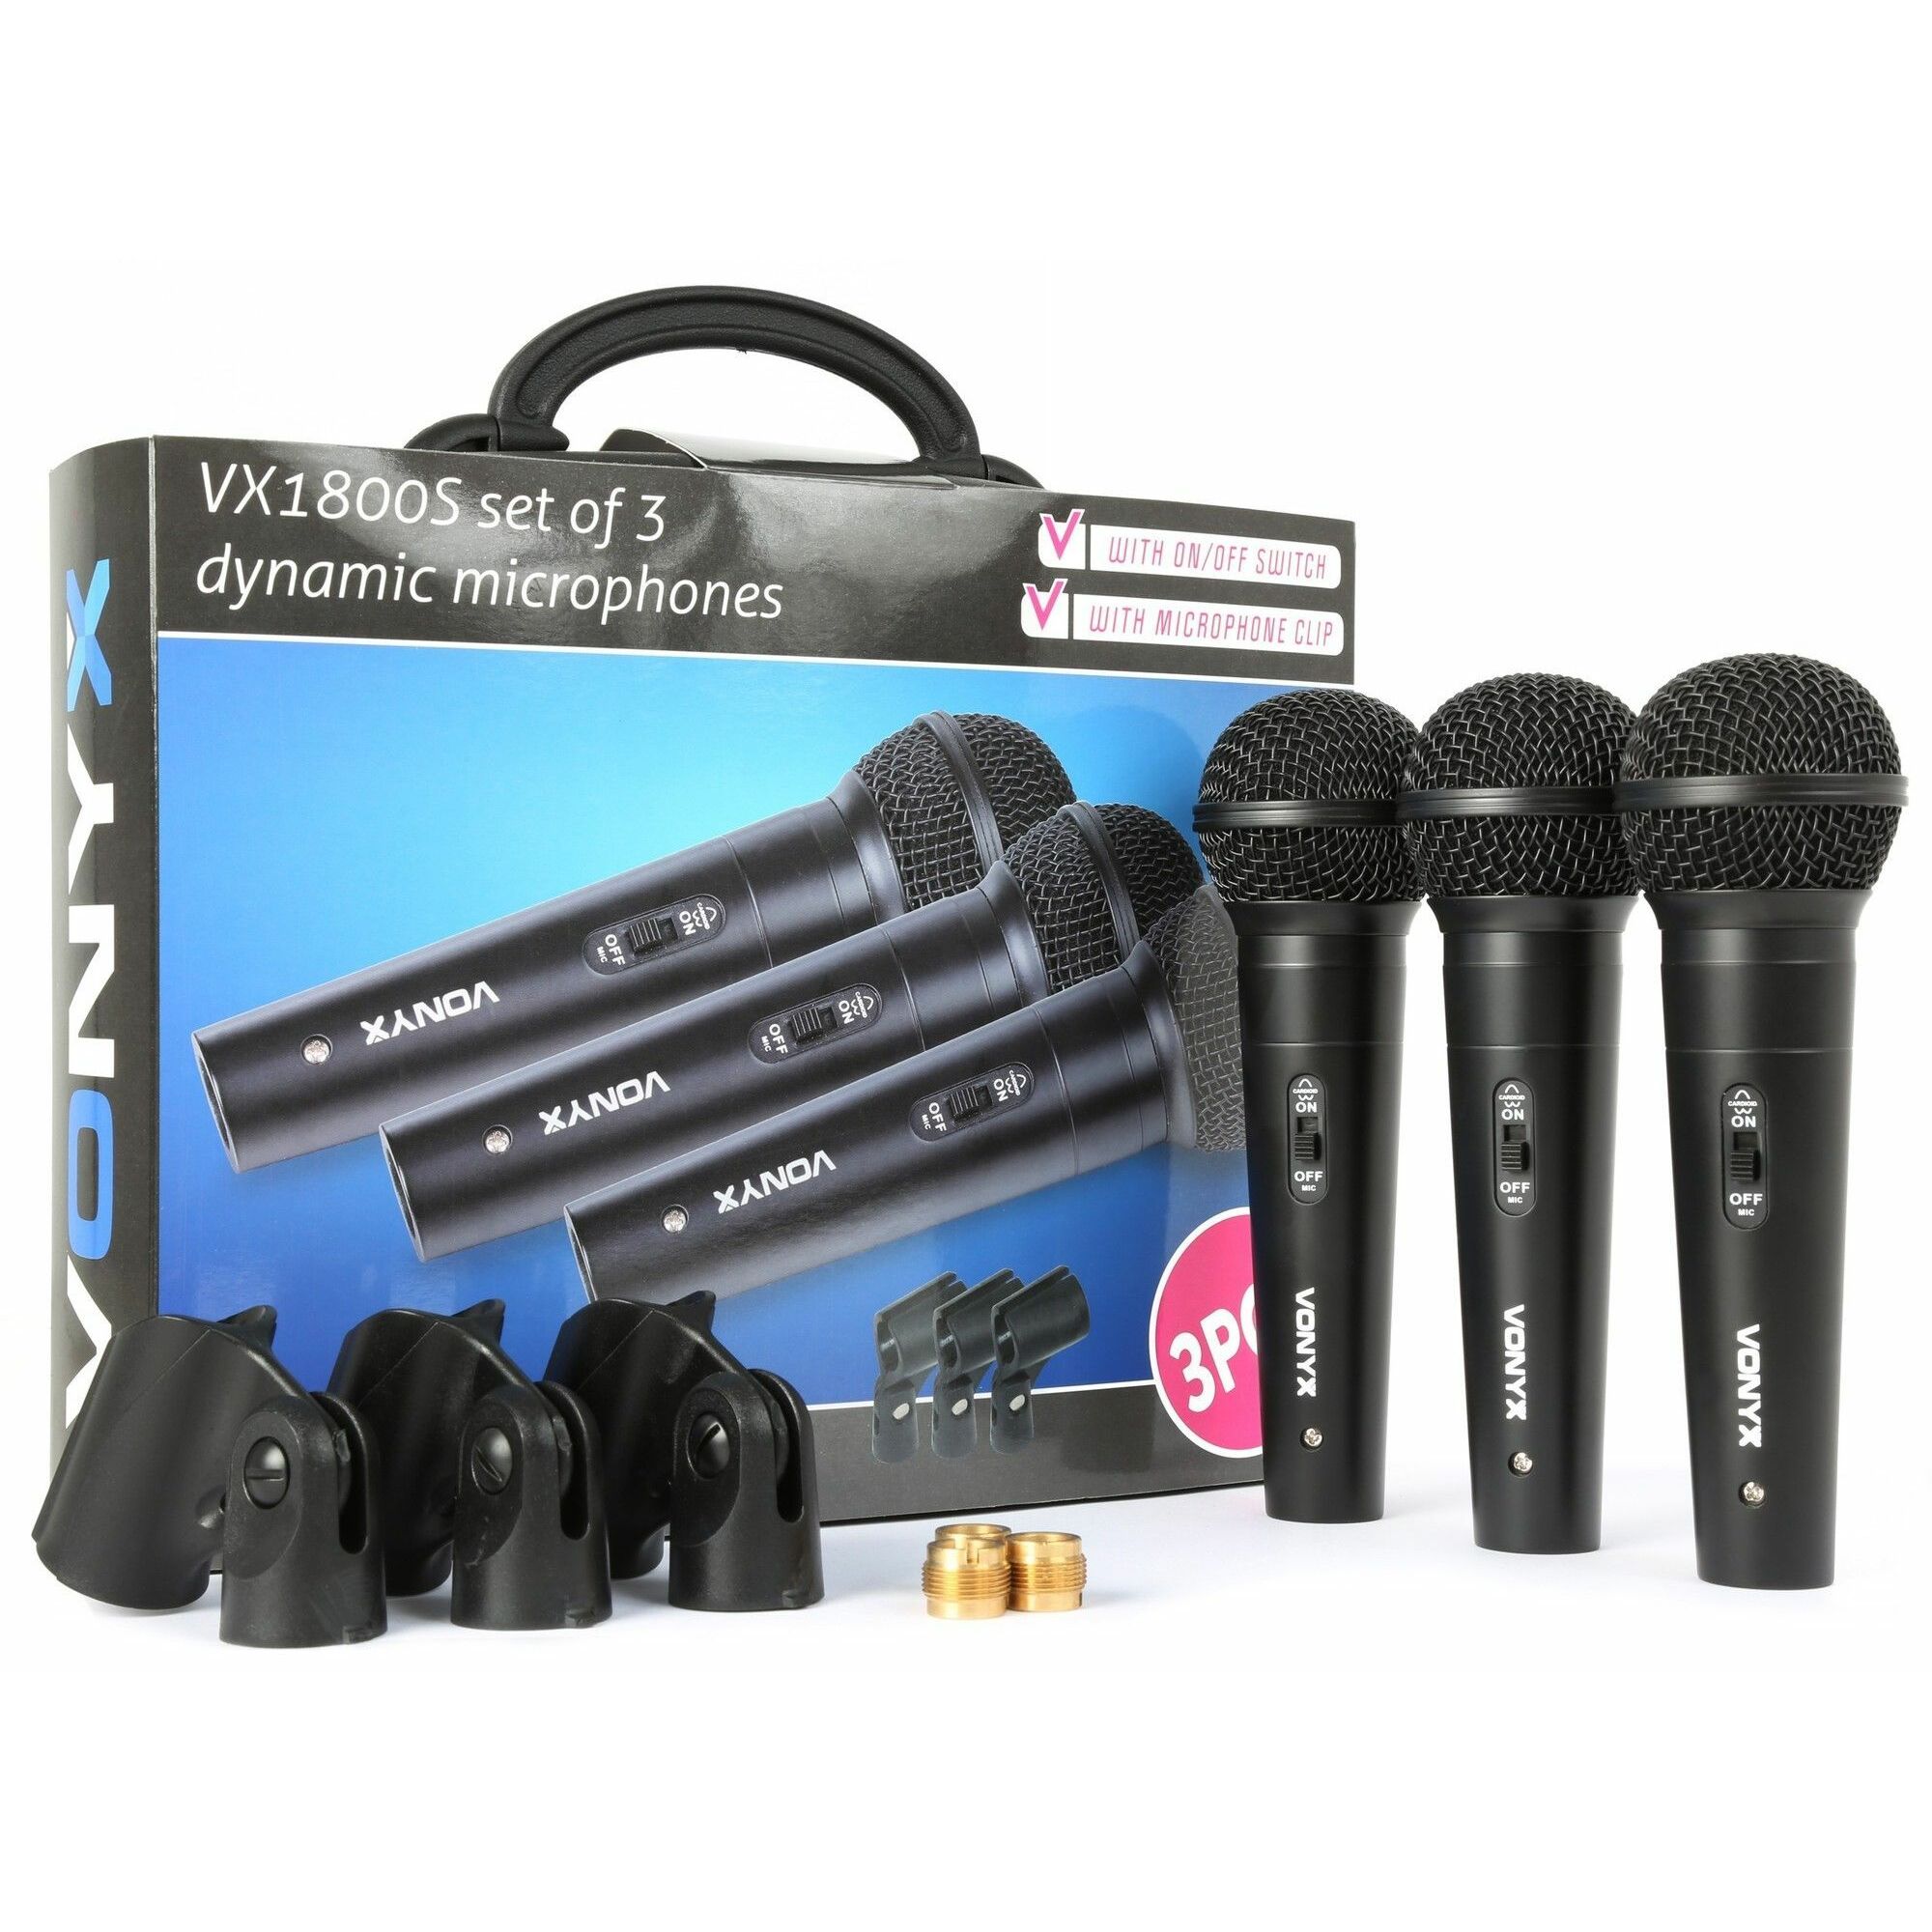 Retourdeal - Vonyx VX1800S Dynamische microfoonset van 3 microfoons